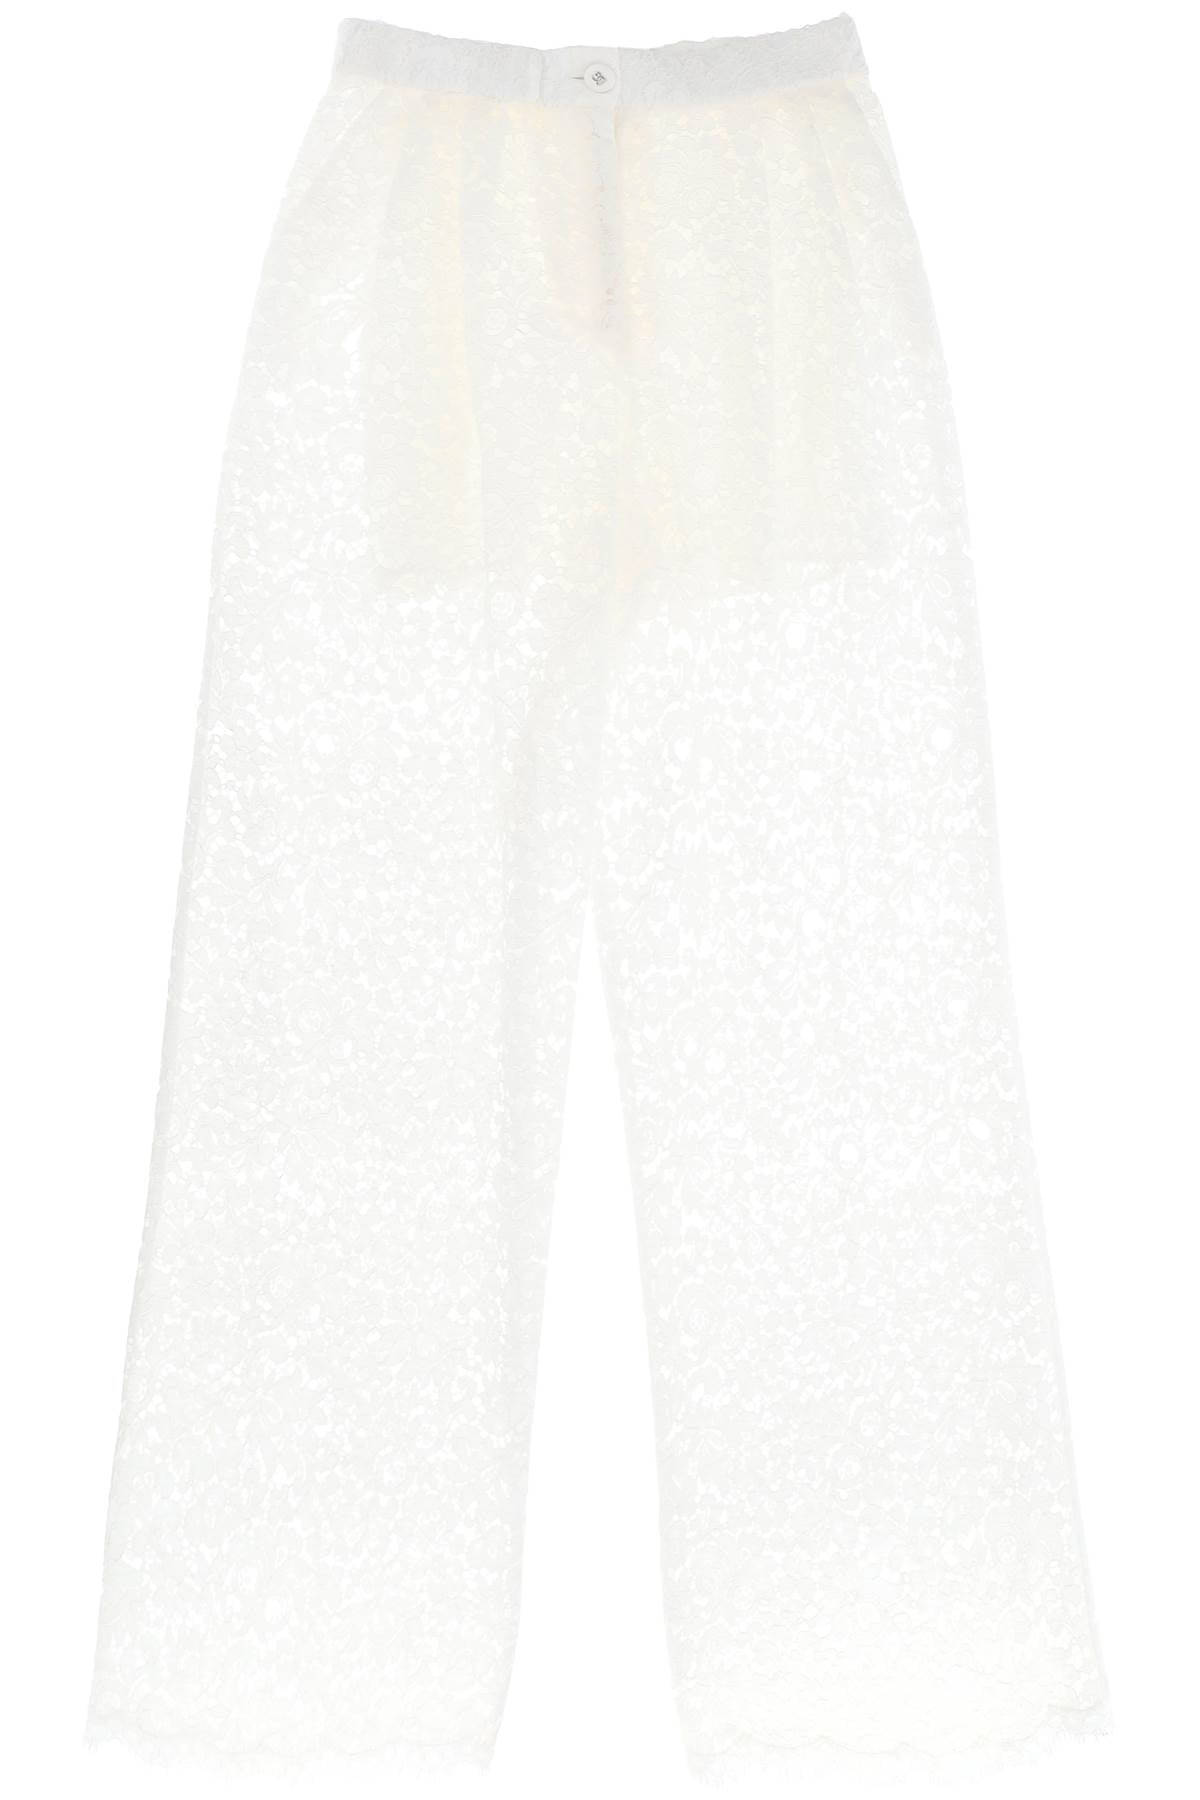 Dolce & gabbana pajama pants in cordonnet lace FTC1YT FLM55 BIANCO